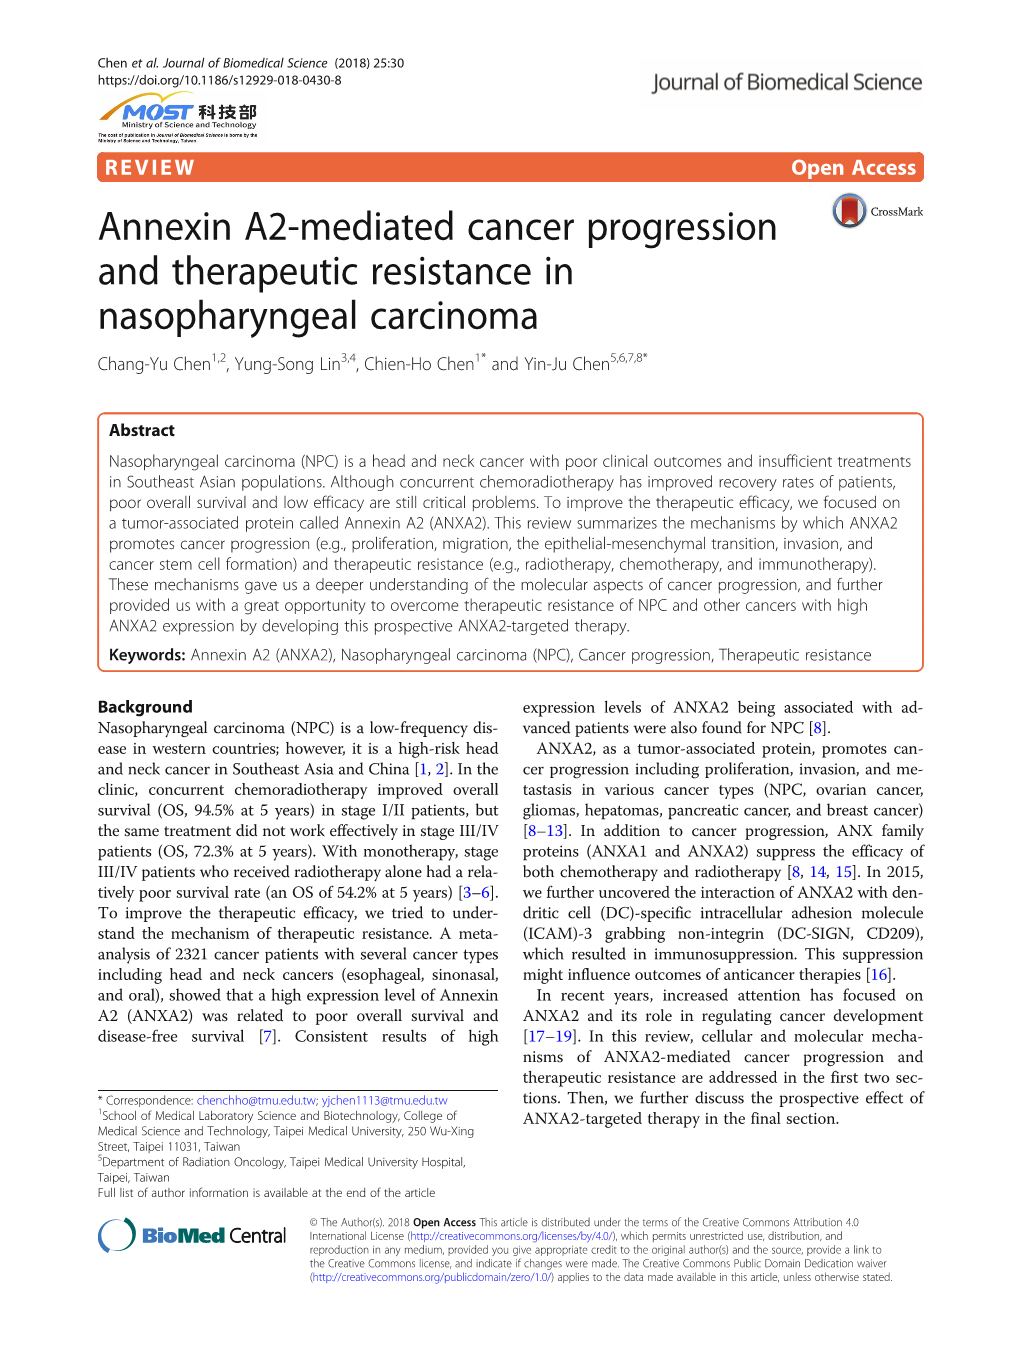 Annexin A2-Mediated Cancer Progression and Therapeutic